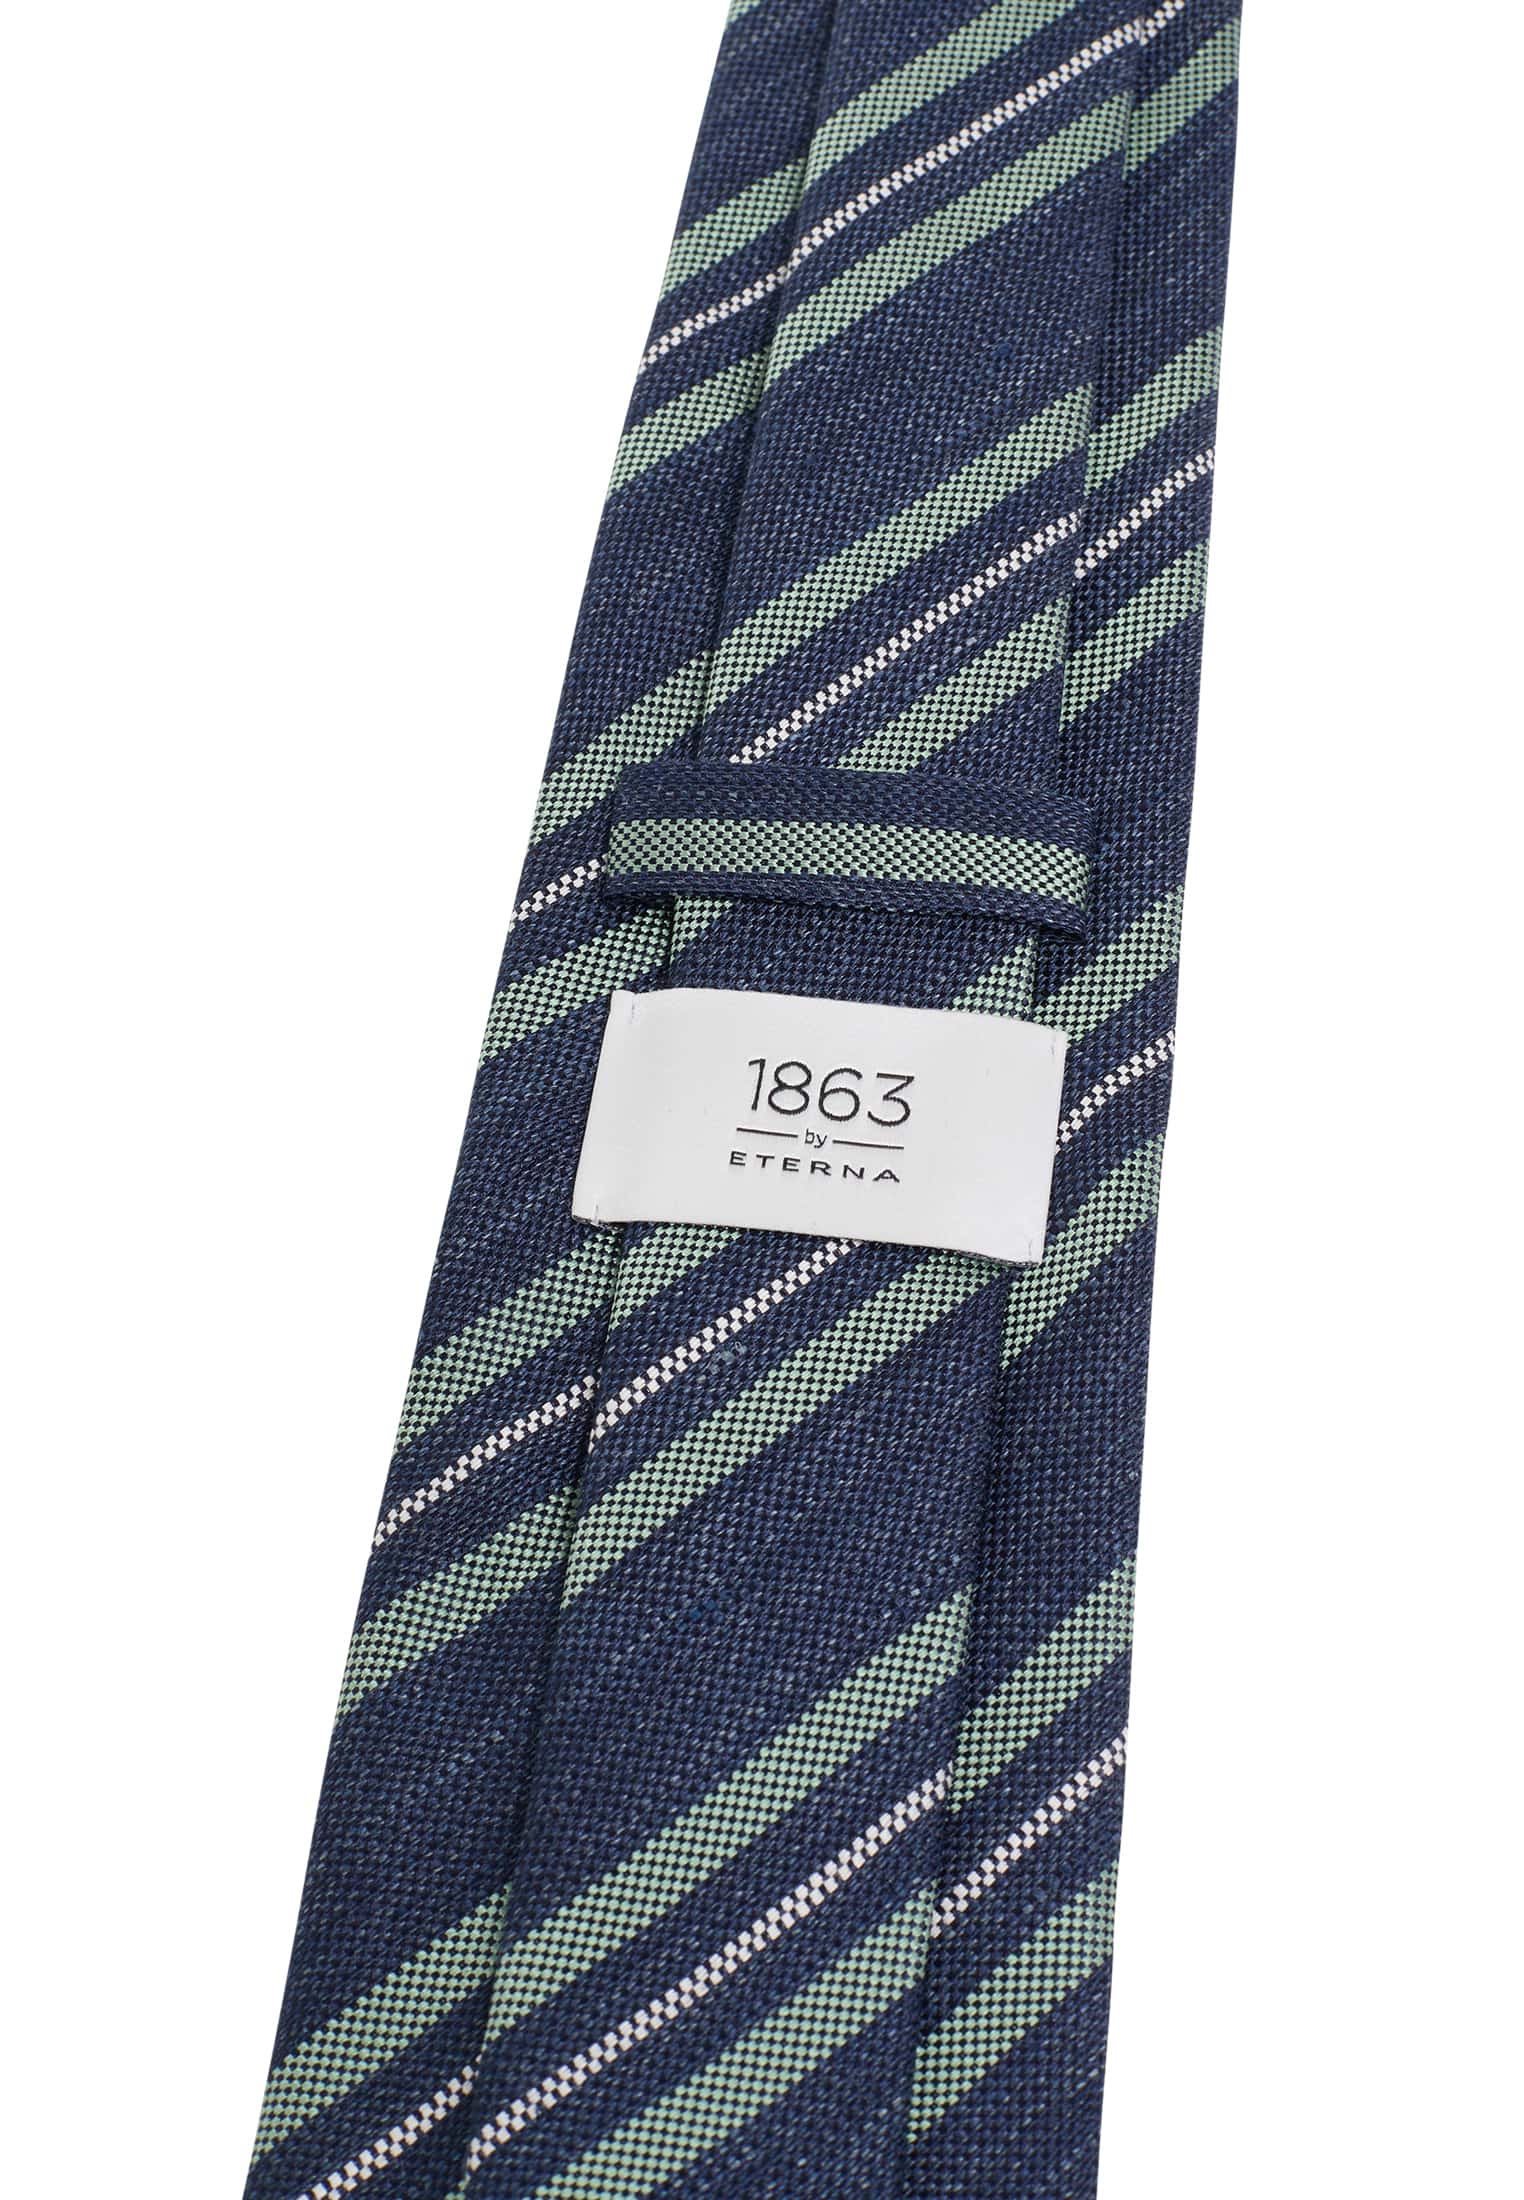 Krawatte in navy/grün 142 | | navy/grün | 1AC01978-81-88-142 gemustert